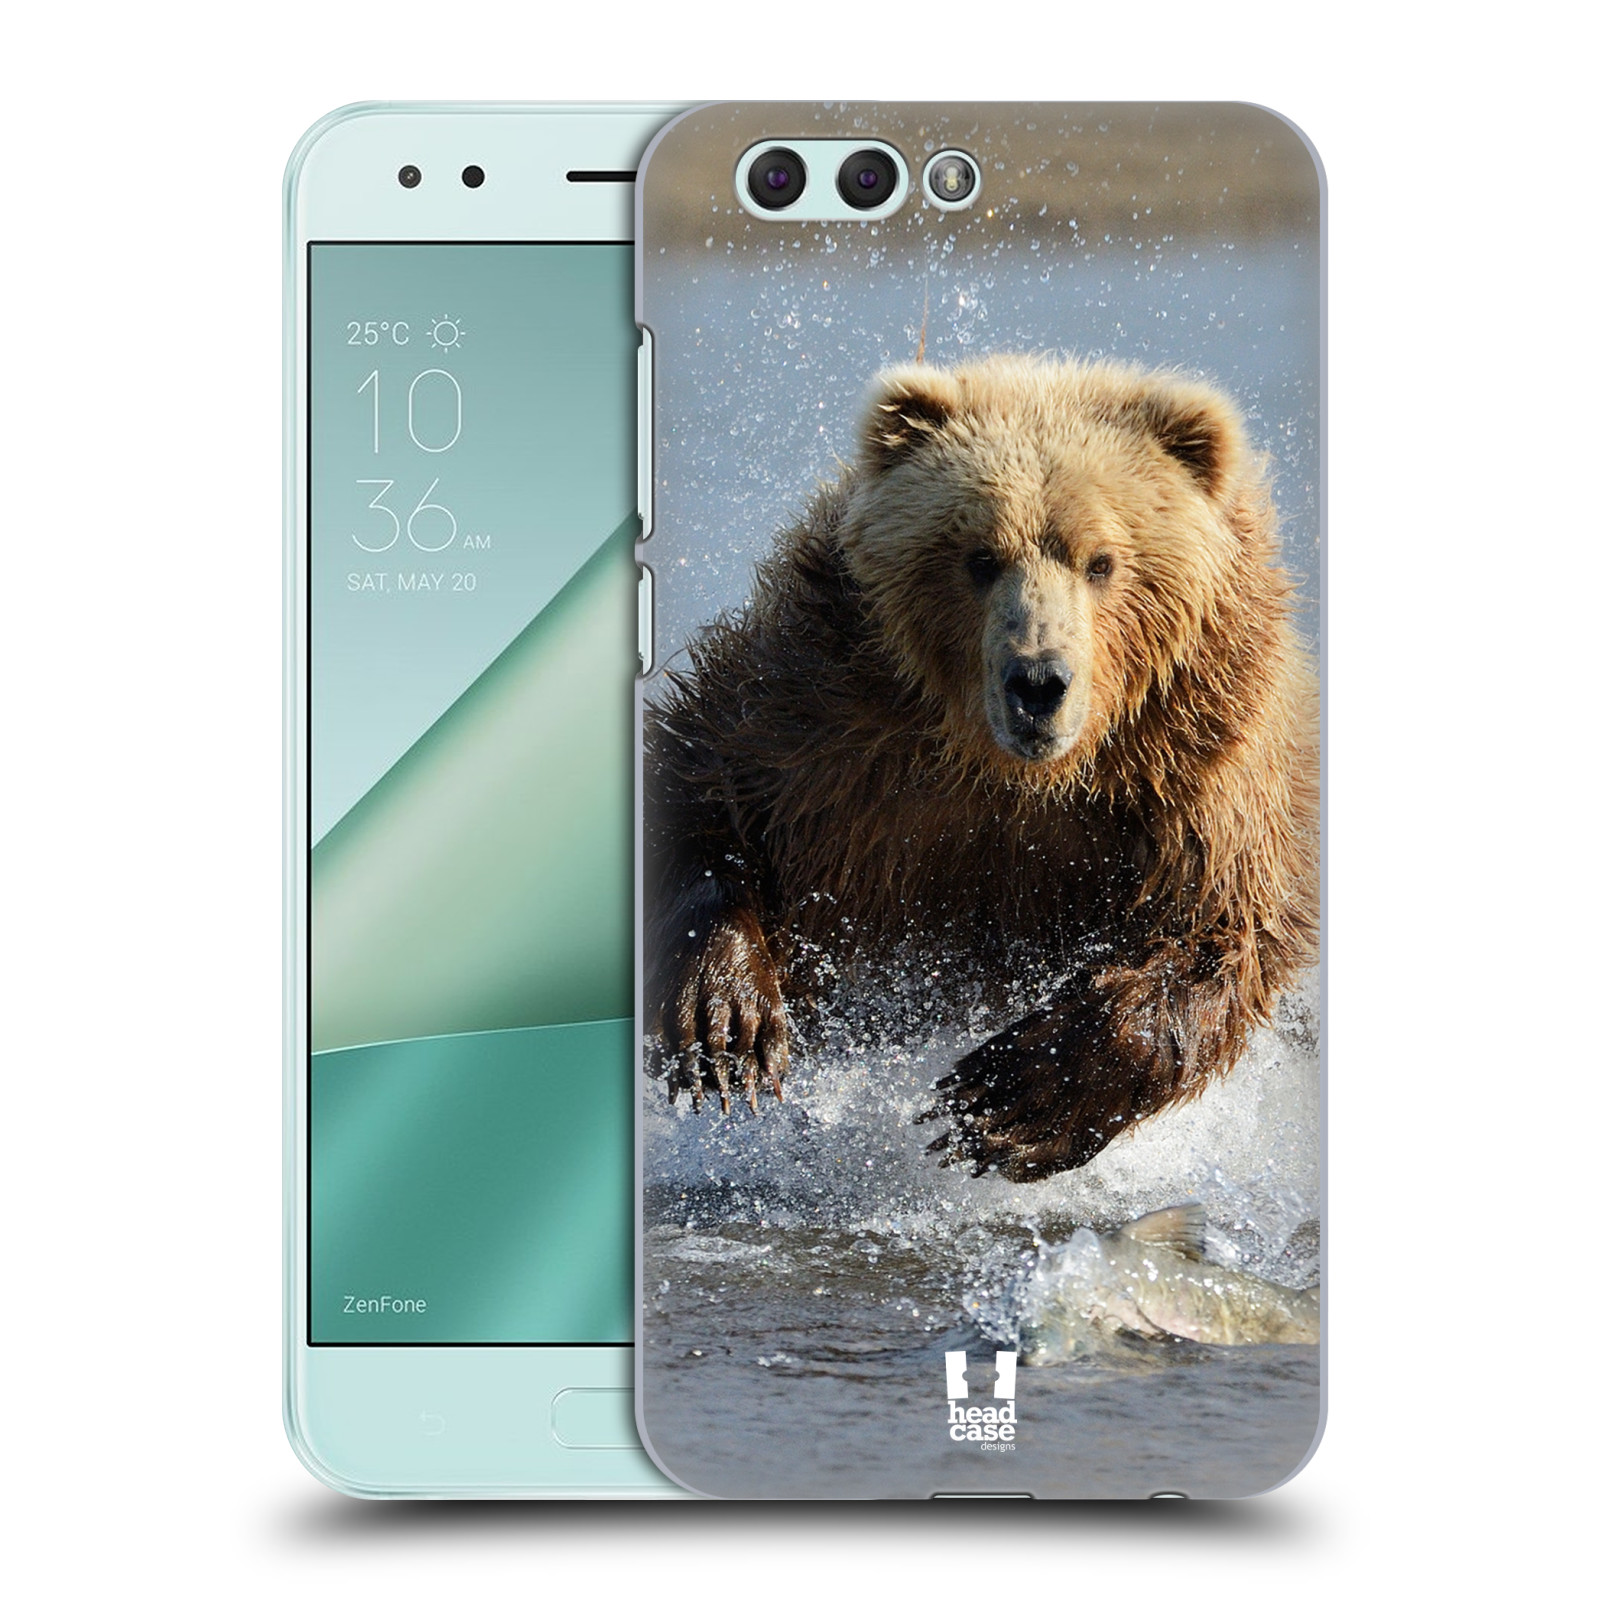 HEAD CASE plastový obal na mobil Asus Zenfone 4 ZE554KL vzor Divočina, Divoký život a zvířata foto MEDVĚD GRIZZLY HŇEDÁ